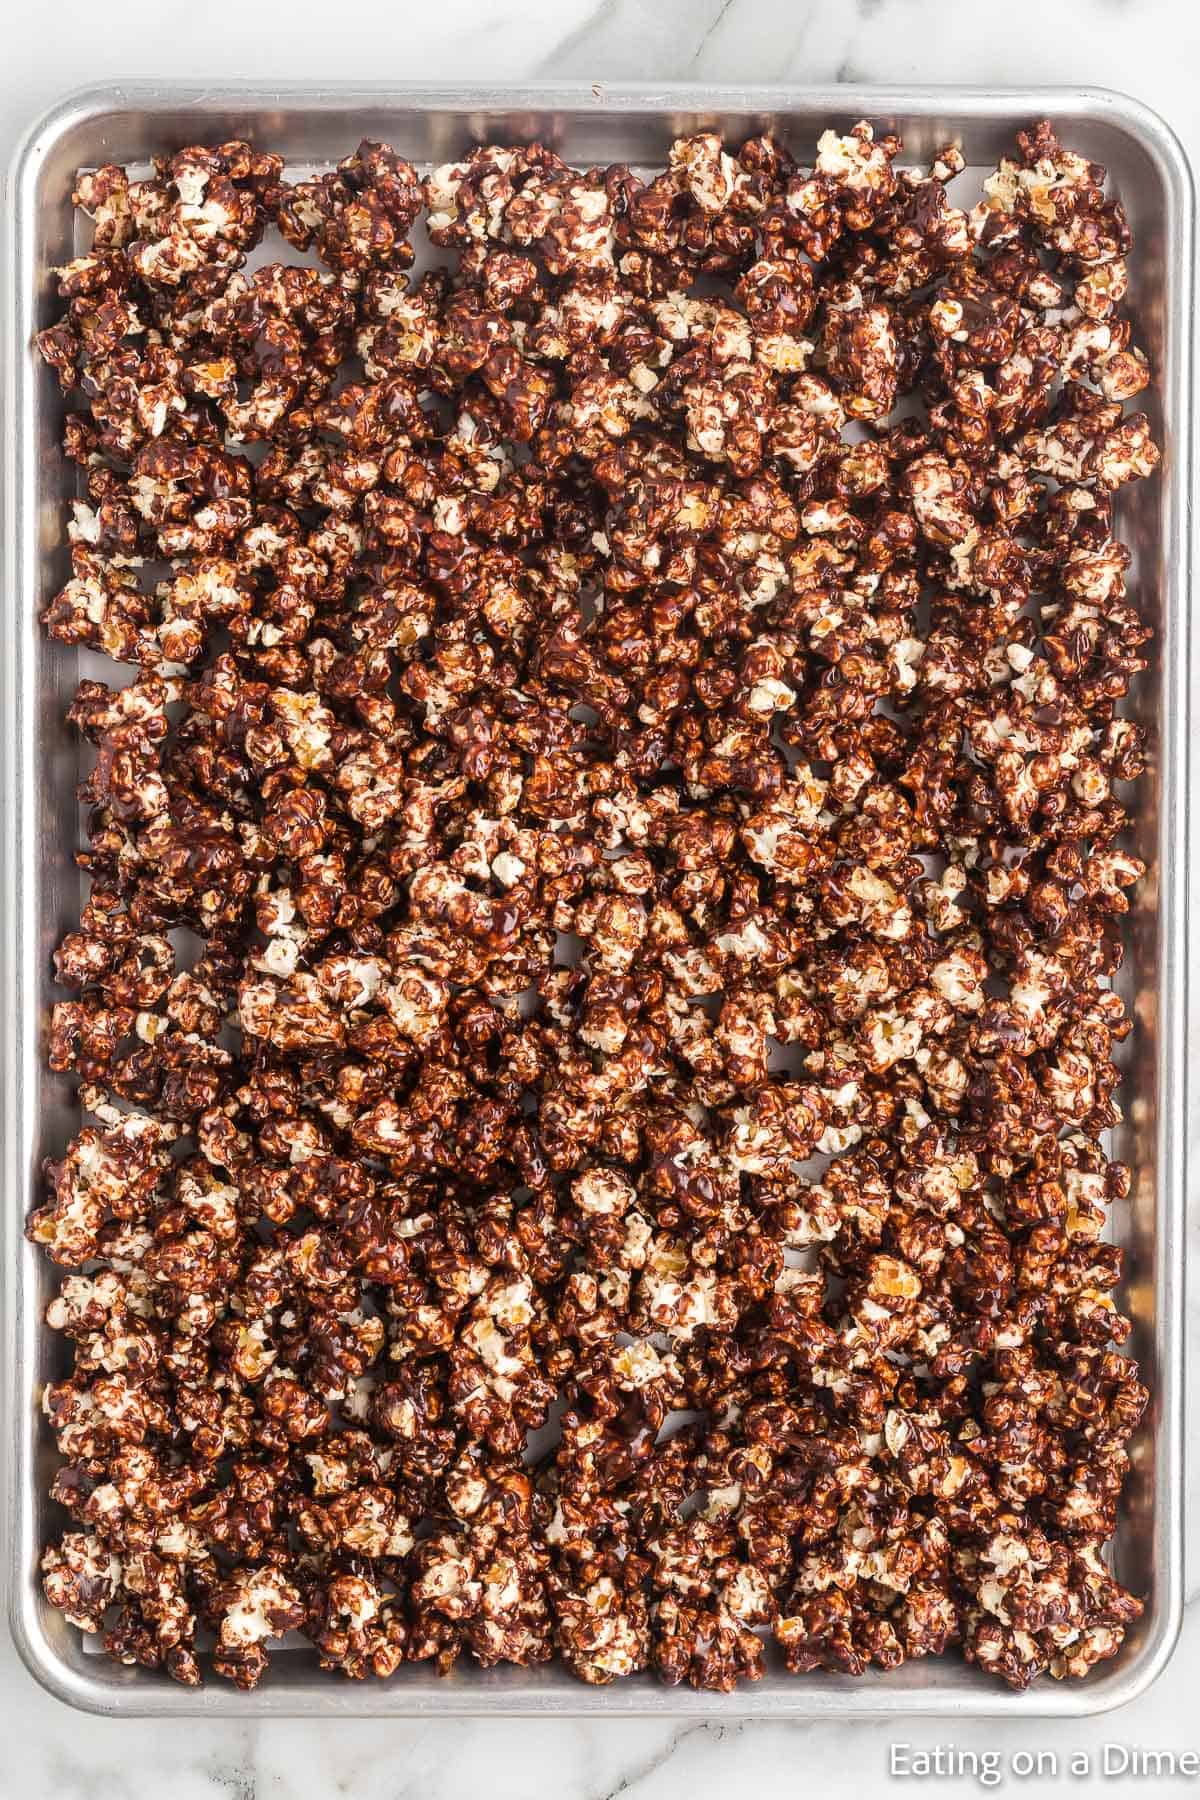 Chocolate popcorn on a baking sheet